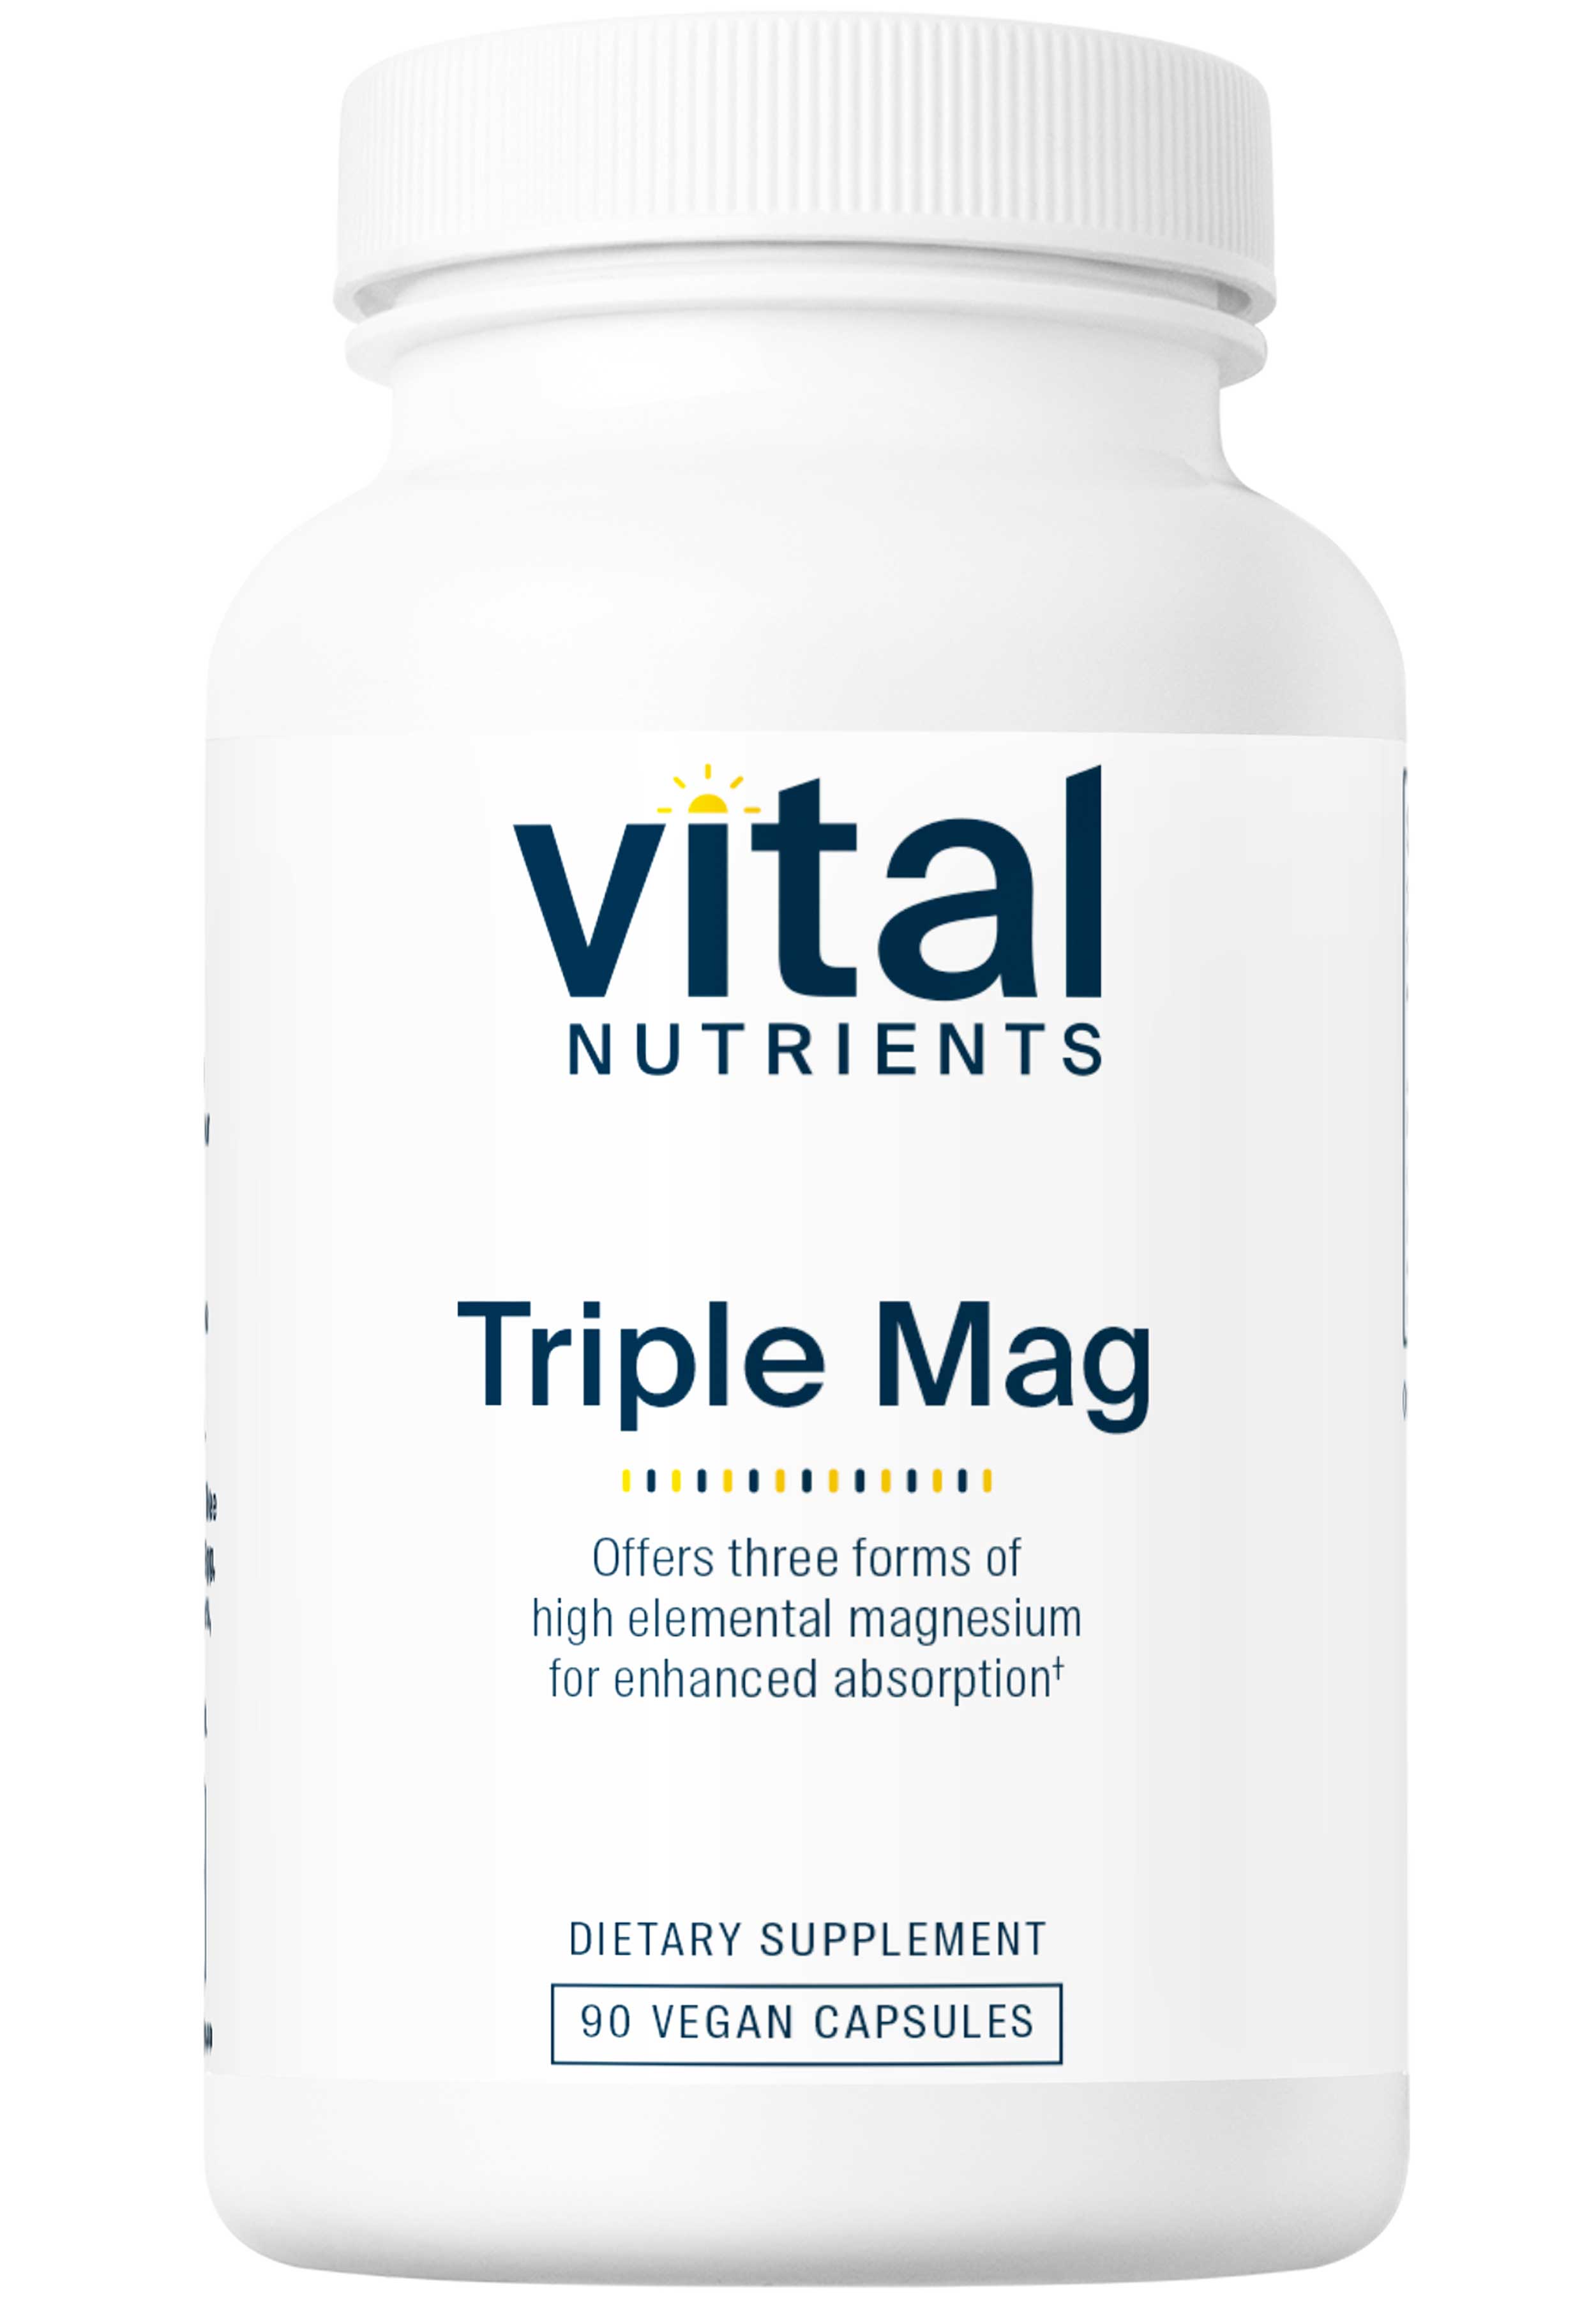 Vital Nutrients Triple Mag